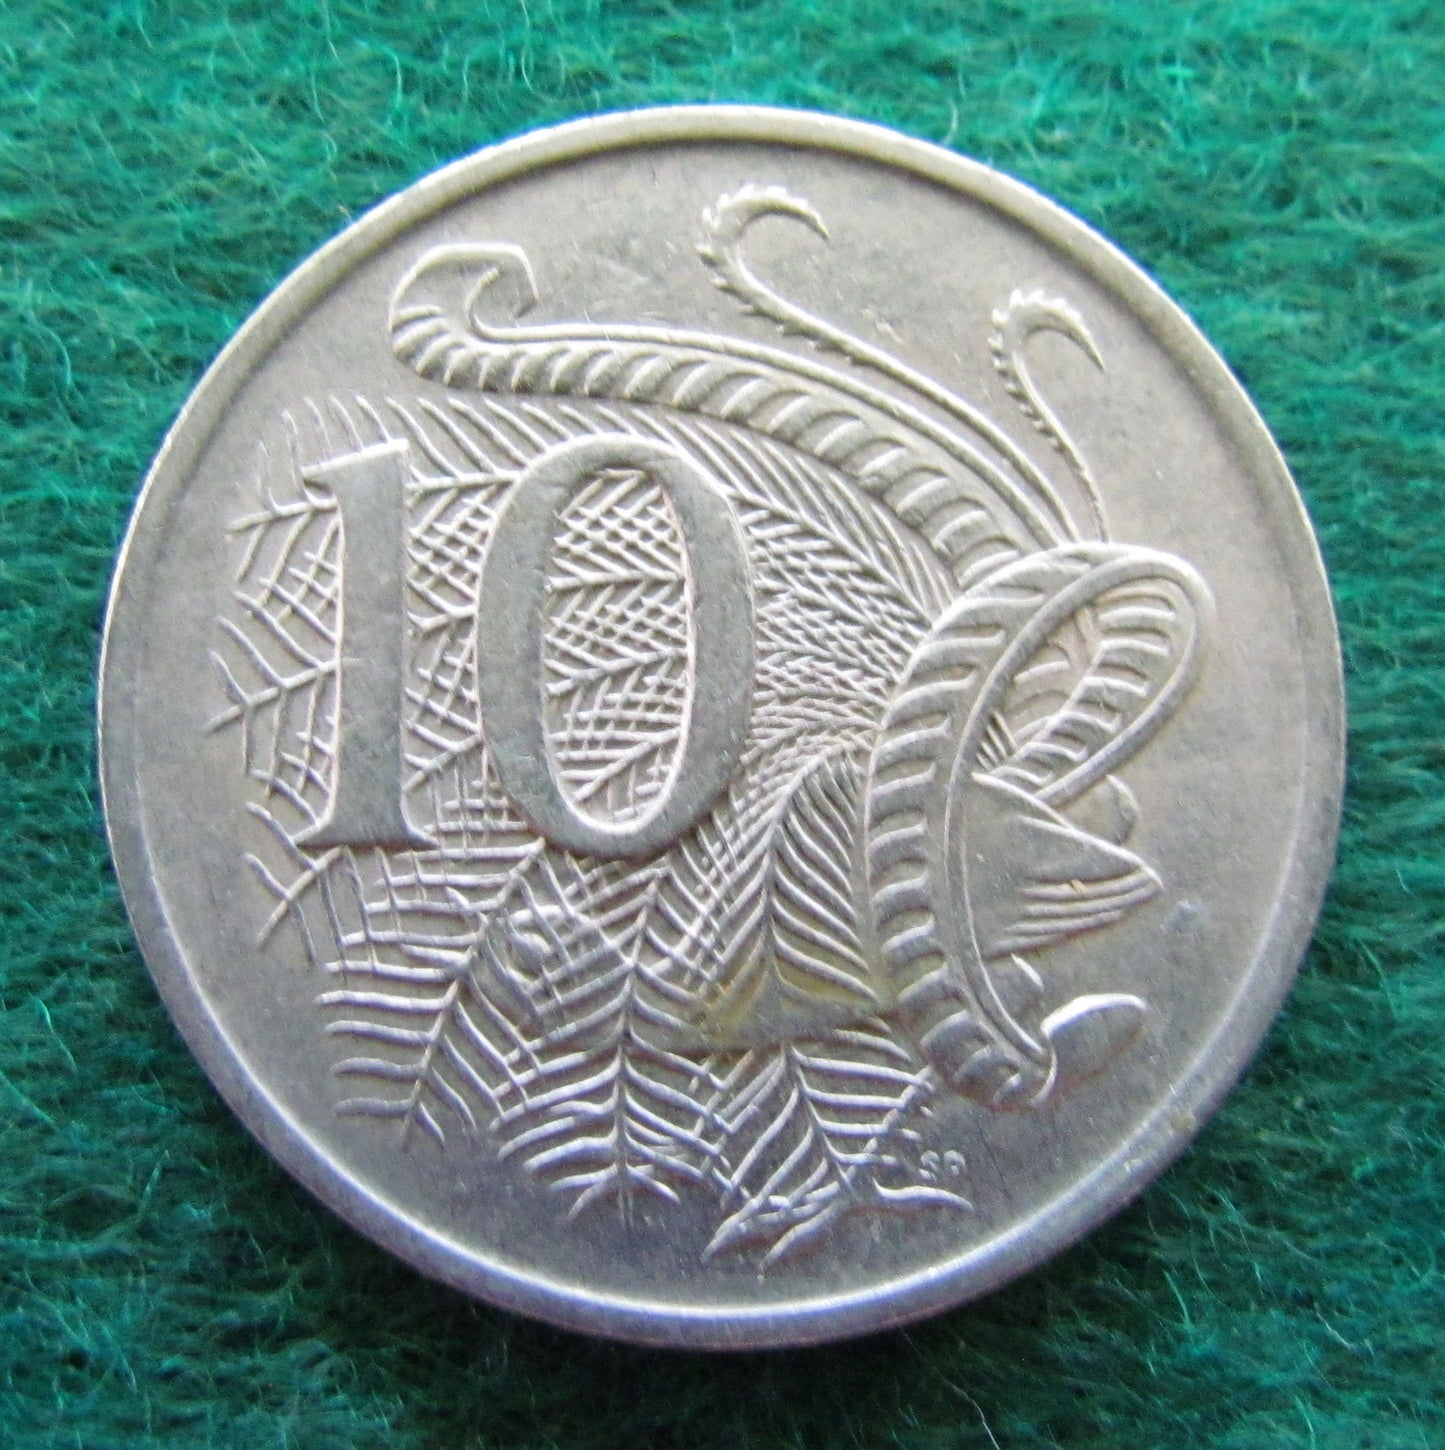 Australian 1966 10 Cent Queen Elizabeth II Coin - Circulated